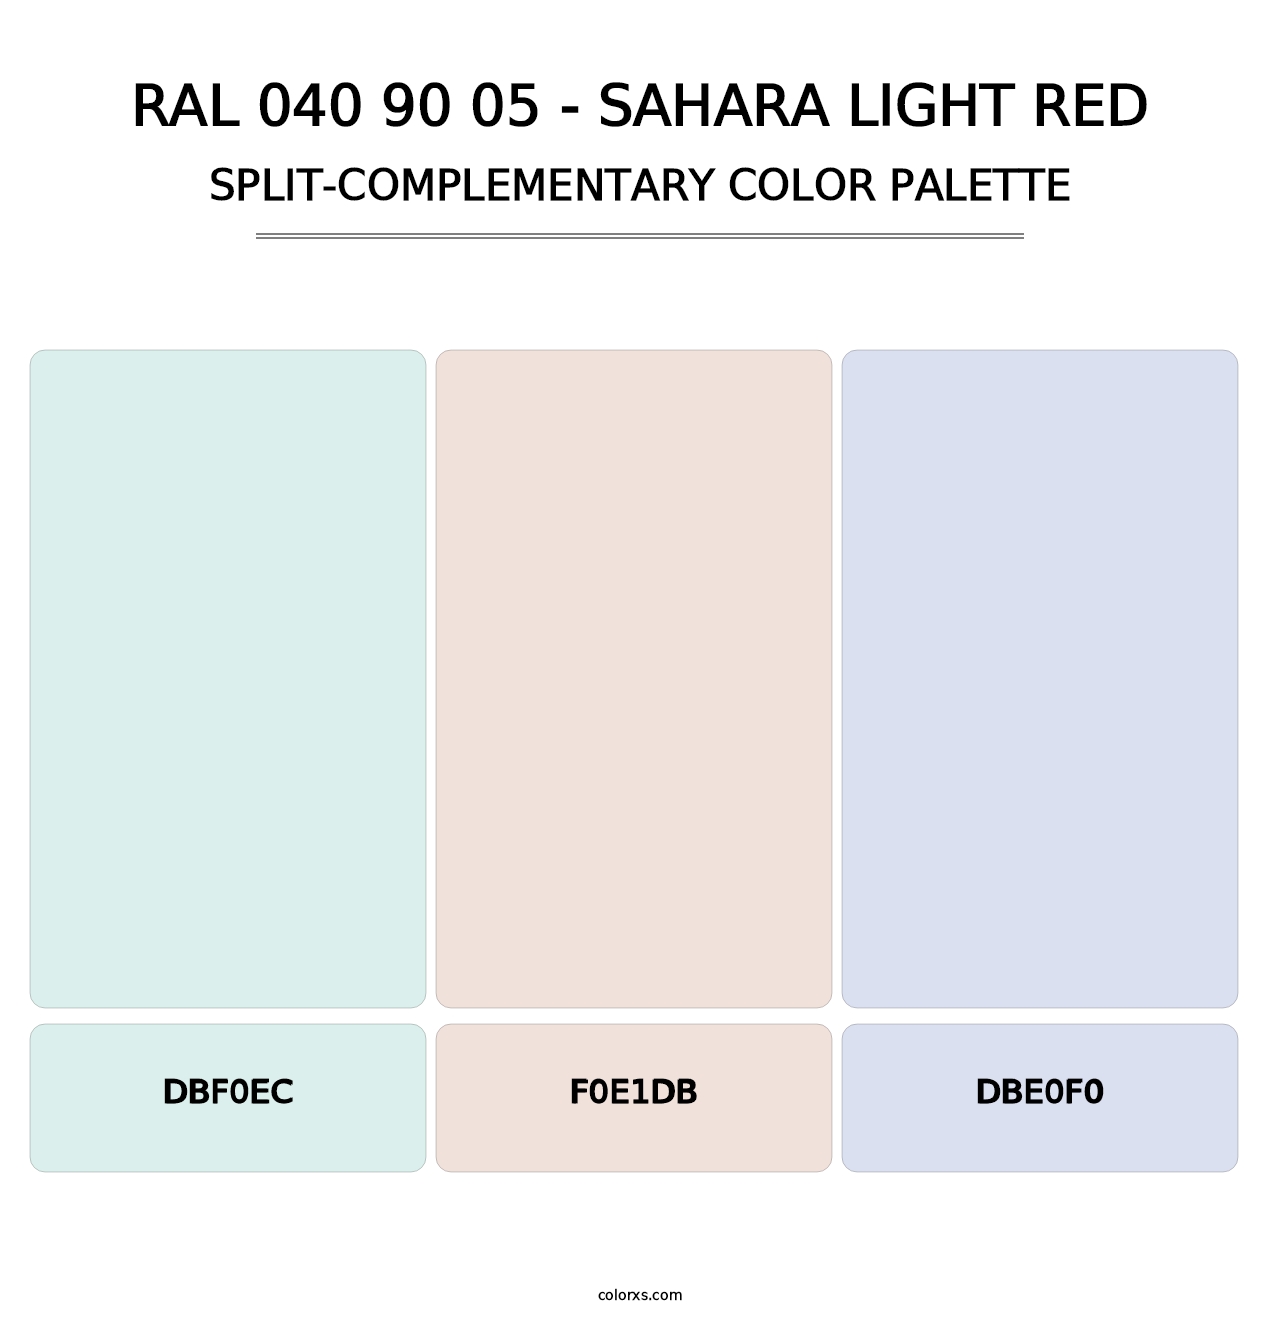 RAL 040 90 05 - Sahara Light Red - Split-Complementary Color Palette